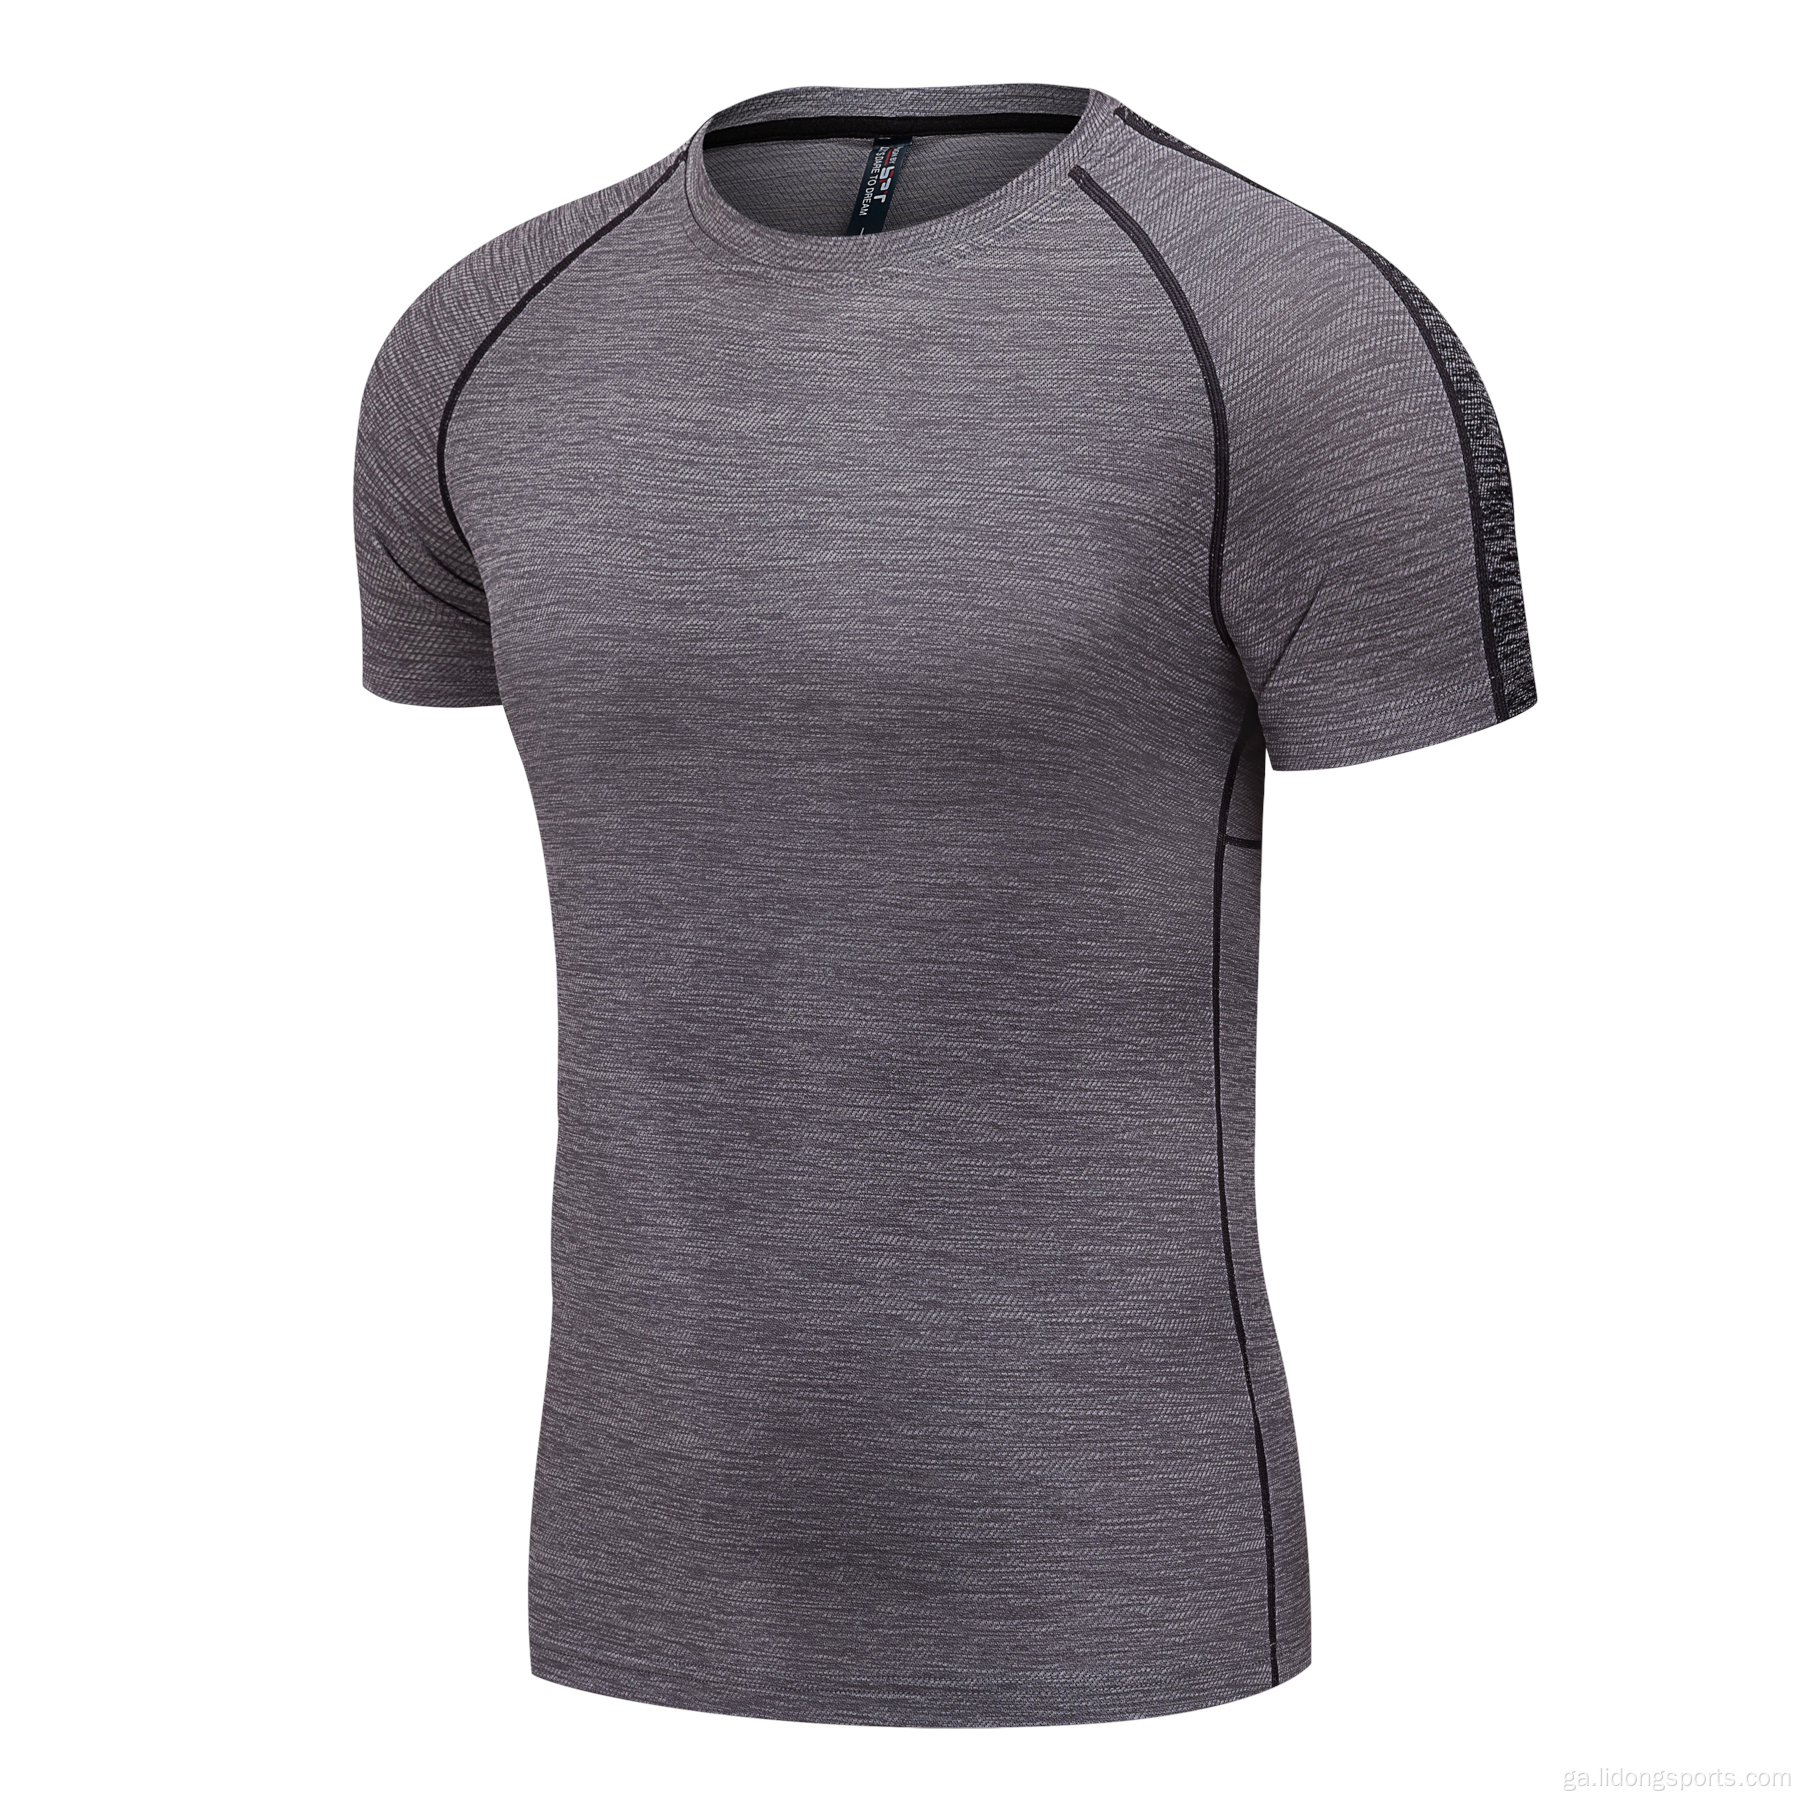 Rith Tshirt Sleeve Sleeve Fitness Tshirt Tshirt T -Sleeve